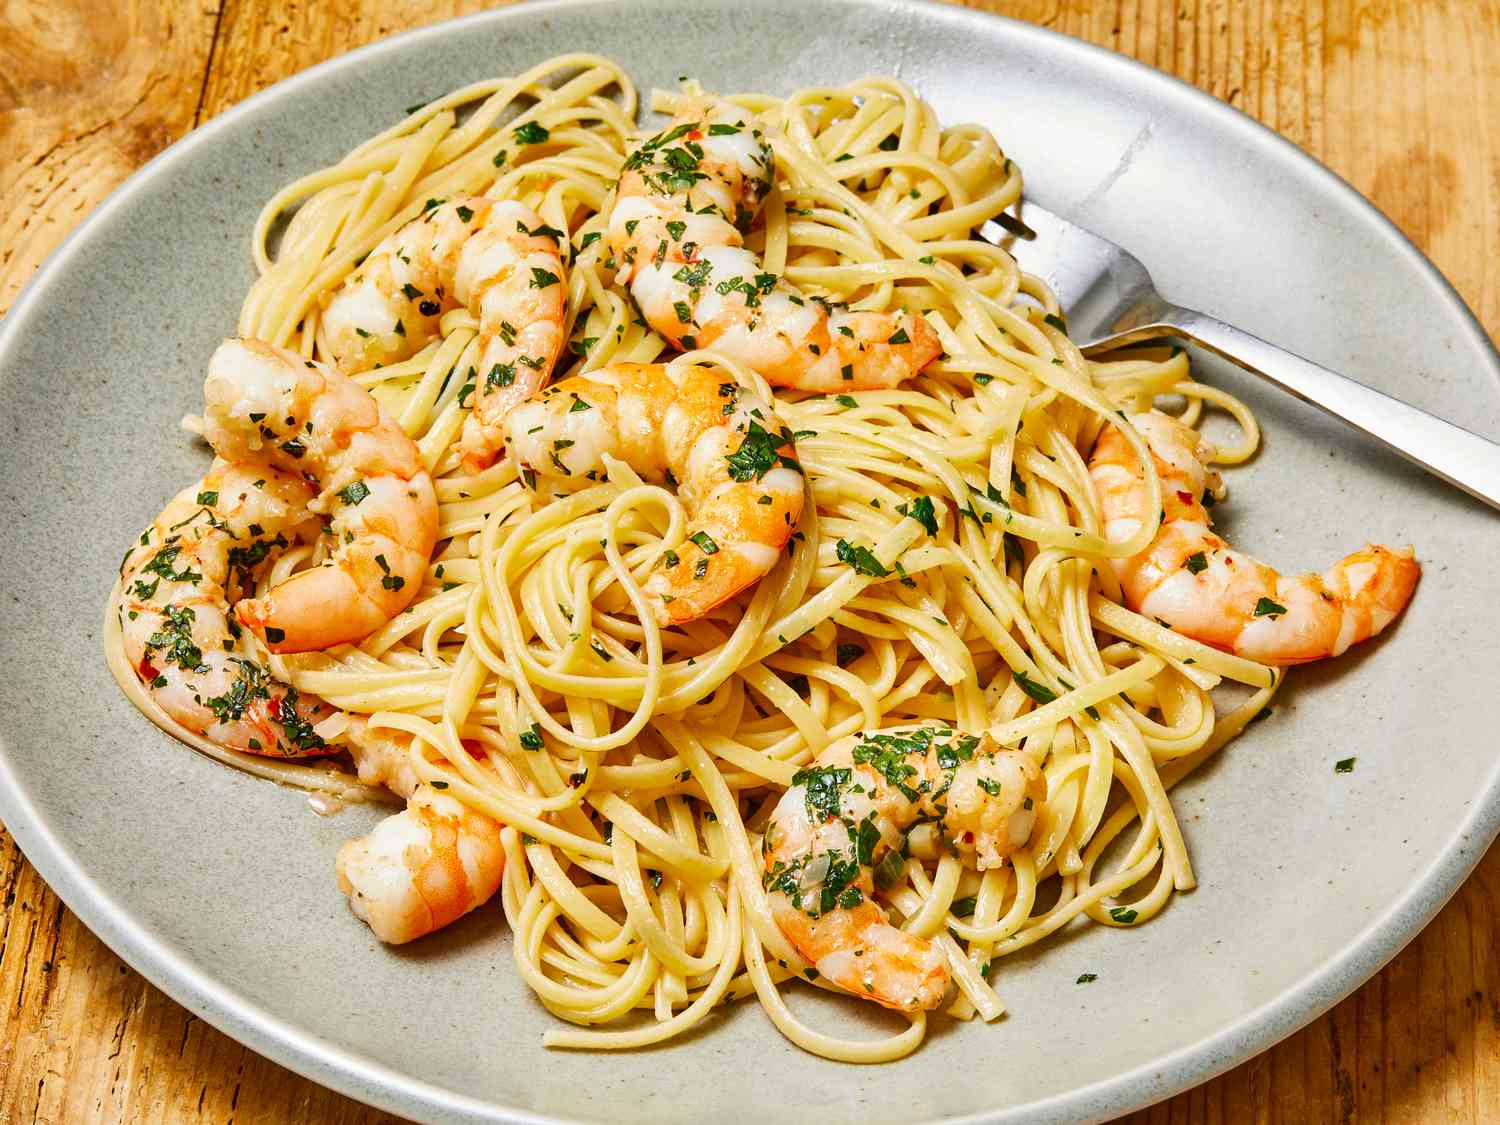 Shrimp Scampi with Pasta